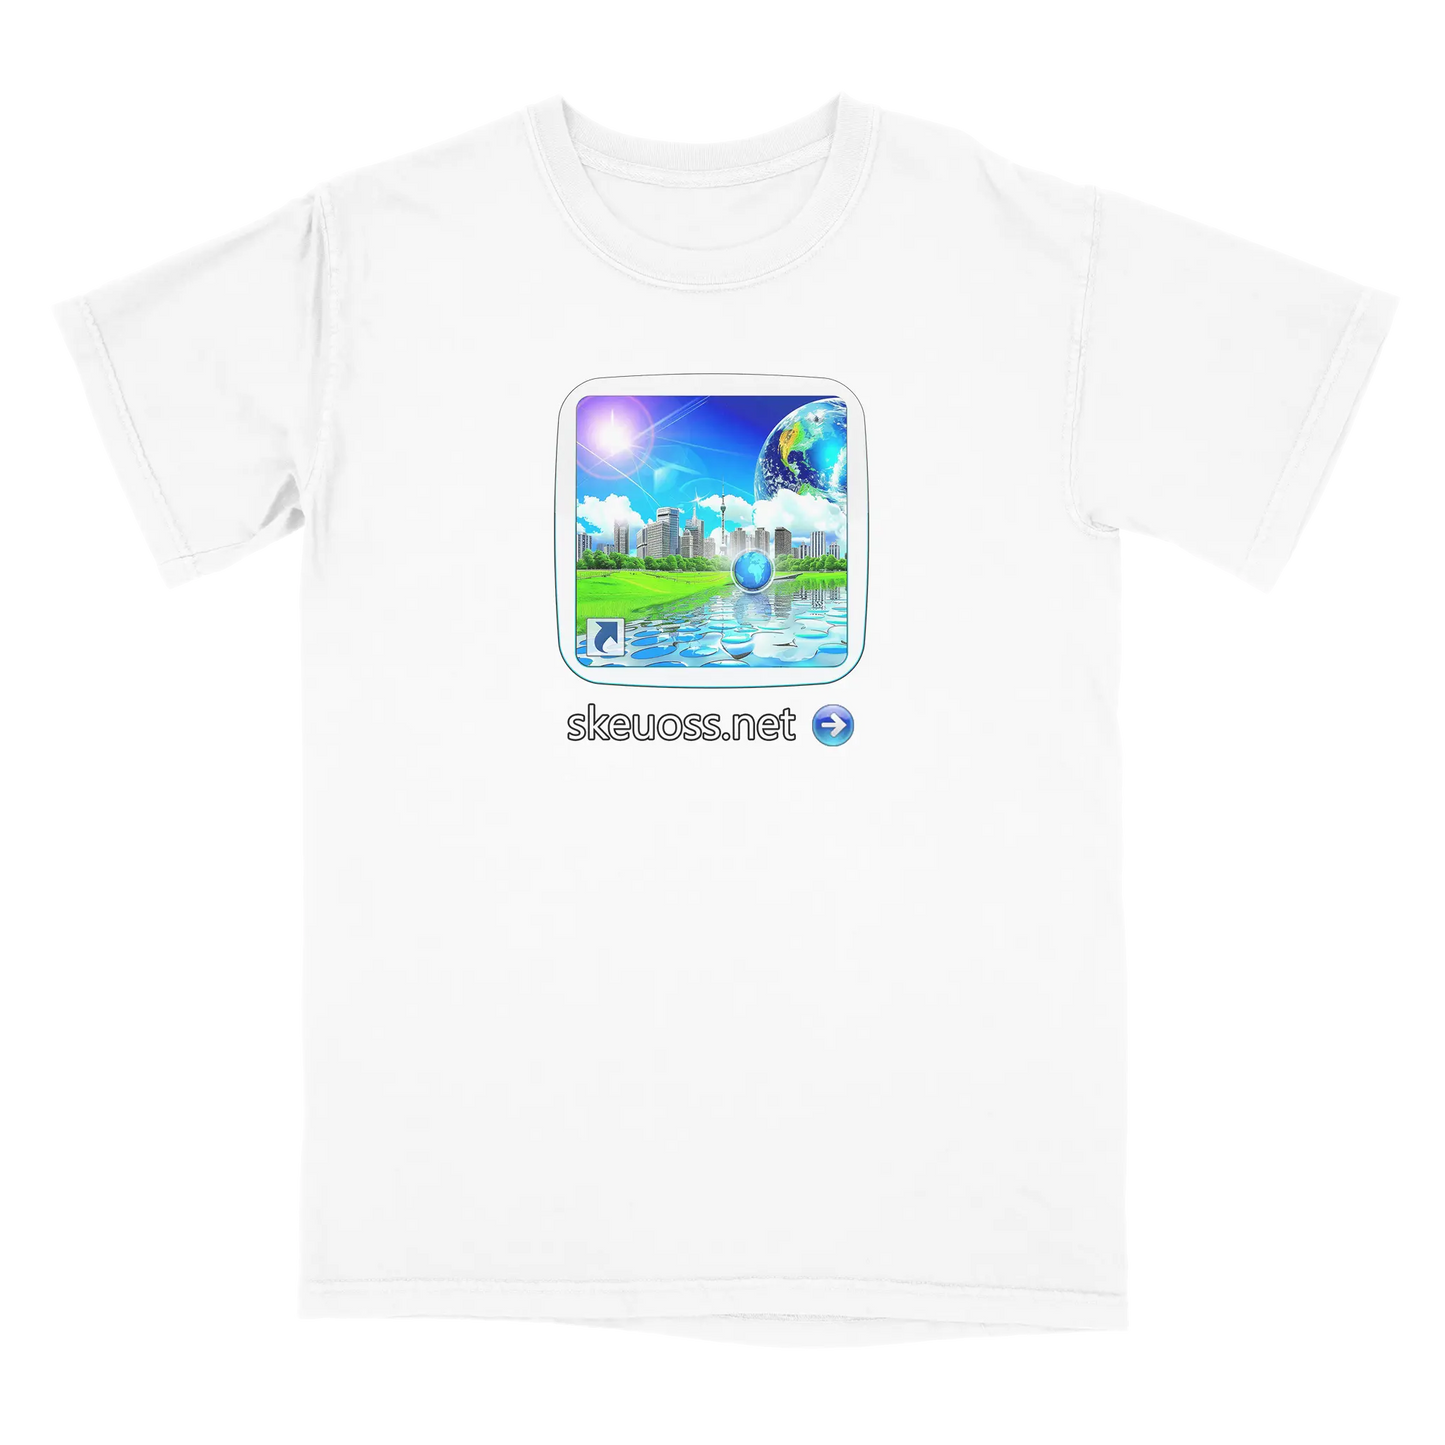 Frutiger Aero T-shirt - User Login Collection - User 394